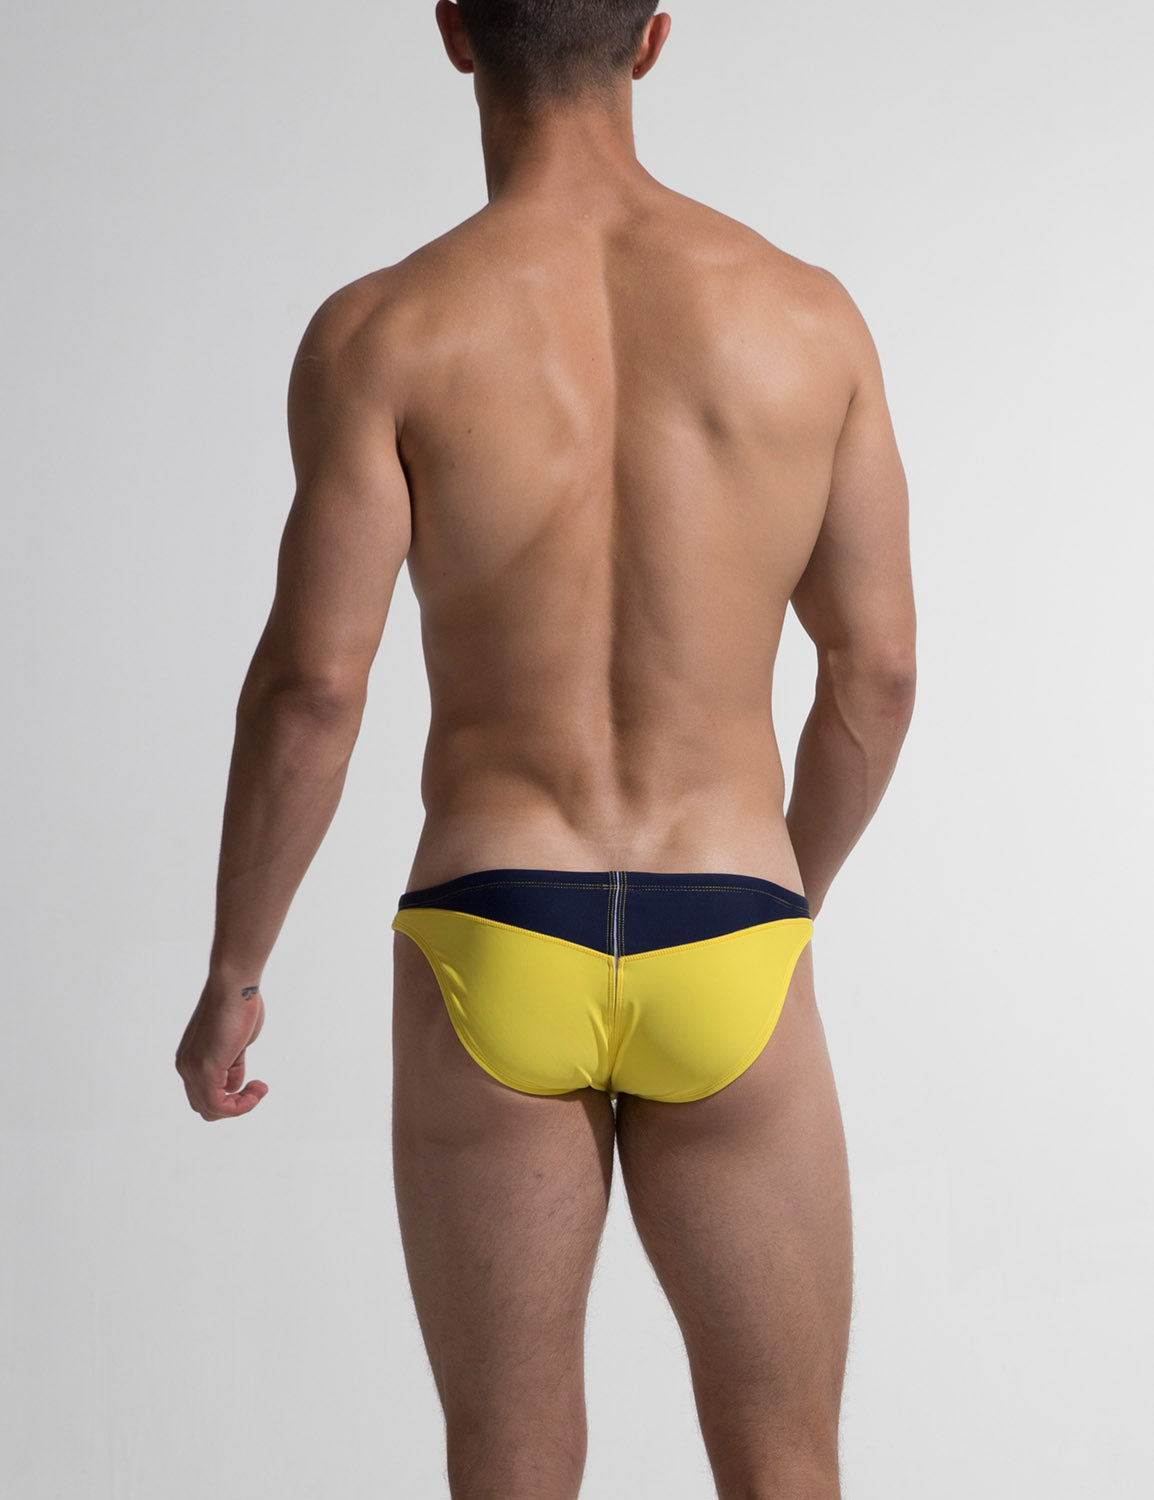 DESMIIT Men's Swimwear Briefs Bikini Low Rise Drawstring Swim Suit (US  Small, Tag M(Waist:26-29inch/72-80cm), Black)